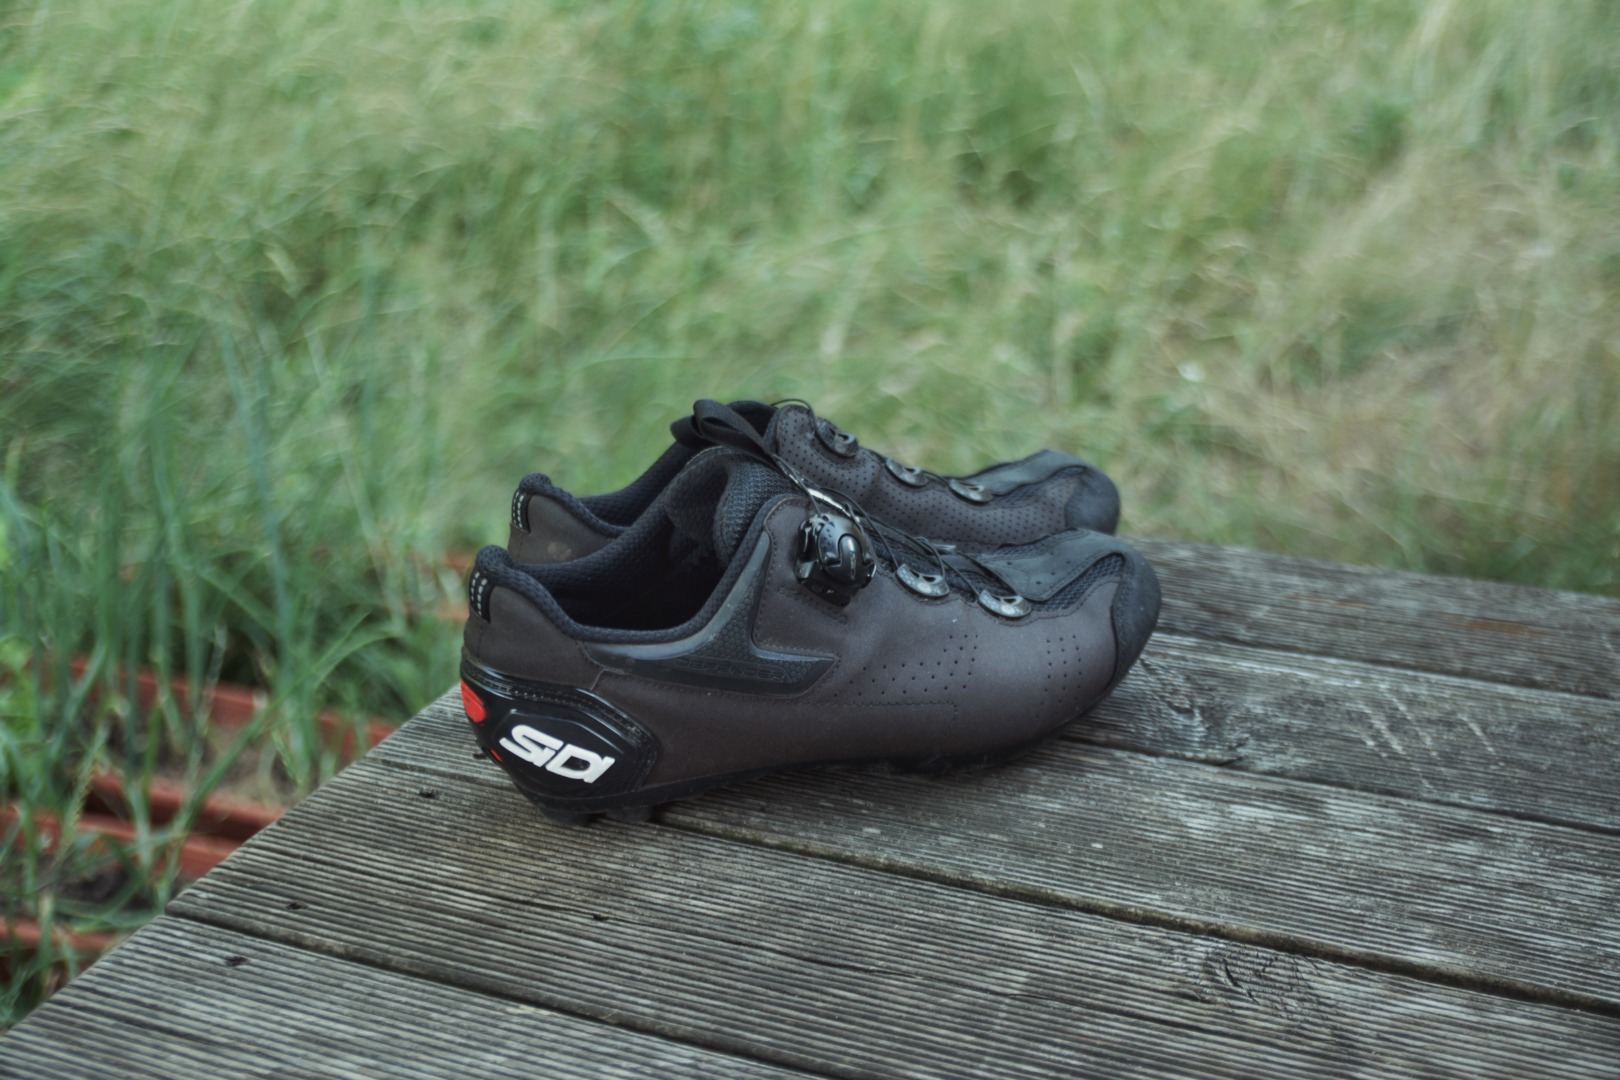 SiDI MTB Gravel – buty rowerowe w prawie każdy teren